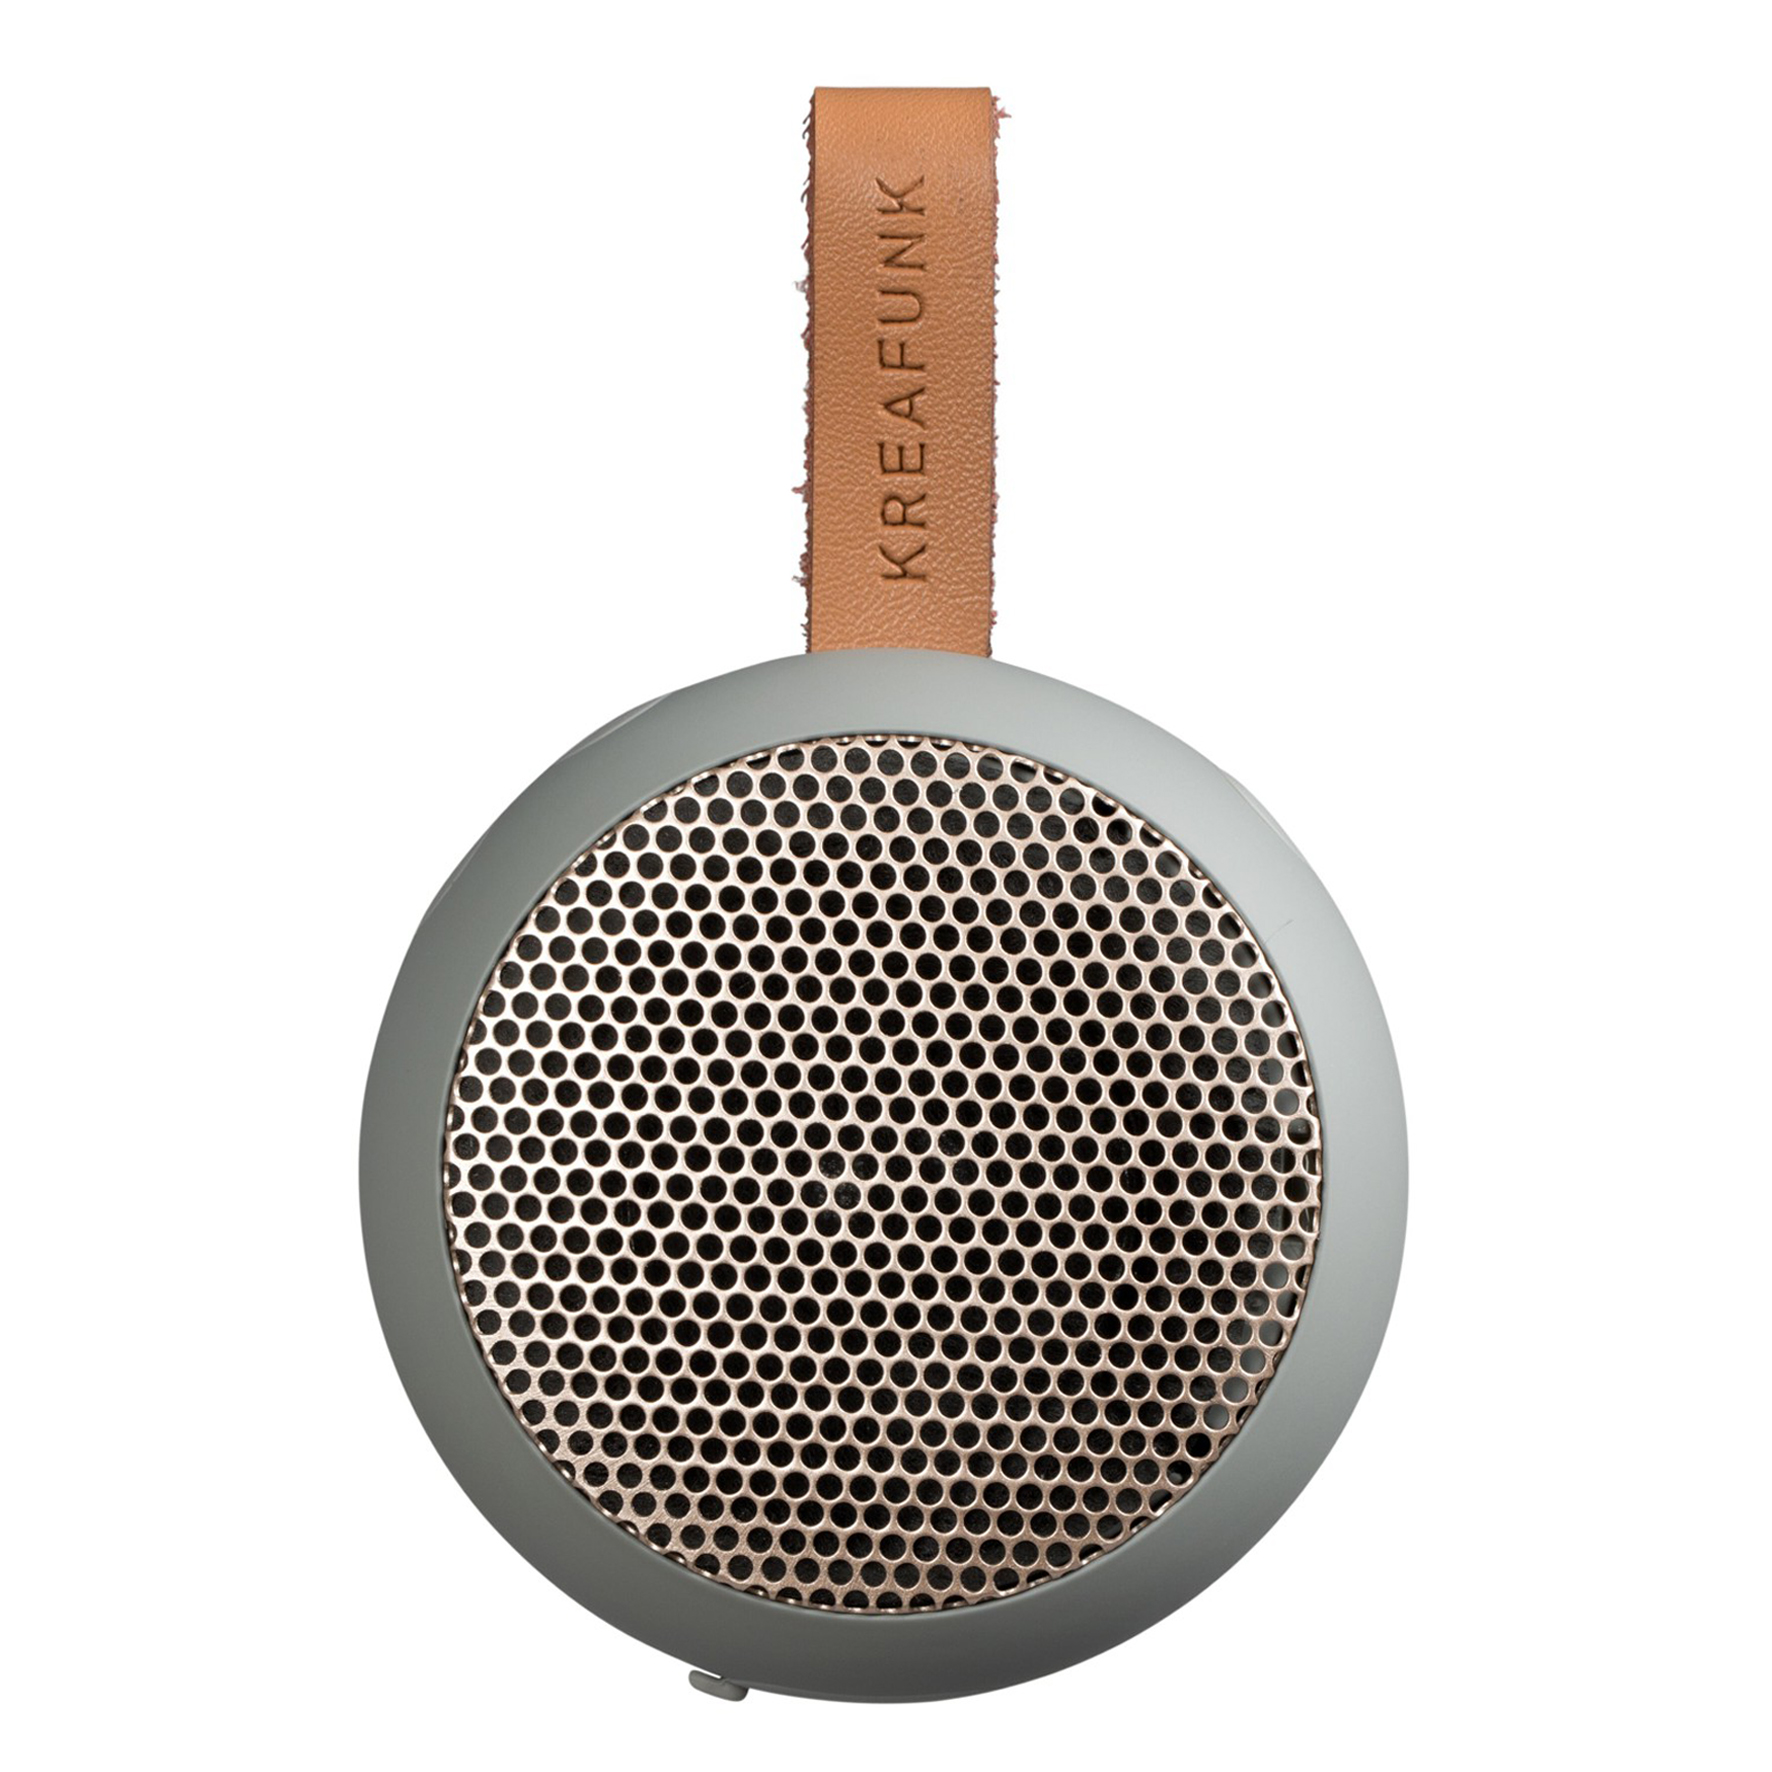 KreaFunk - aGO Bluetooth Speaker - Cool Grey/Rose Gold Grill (Kfwt34)